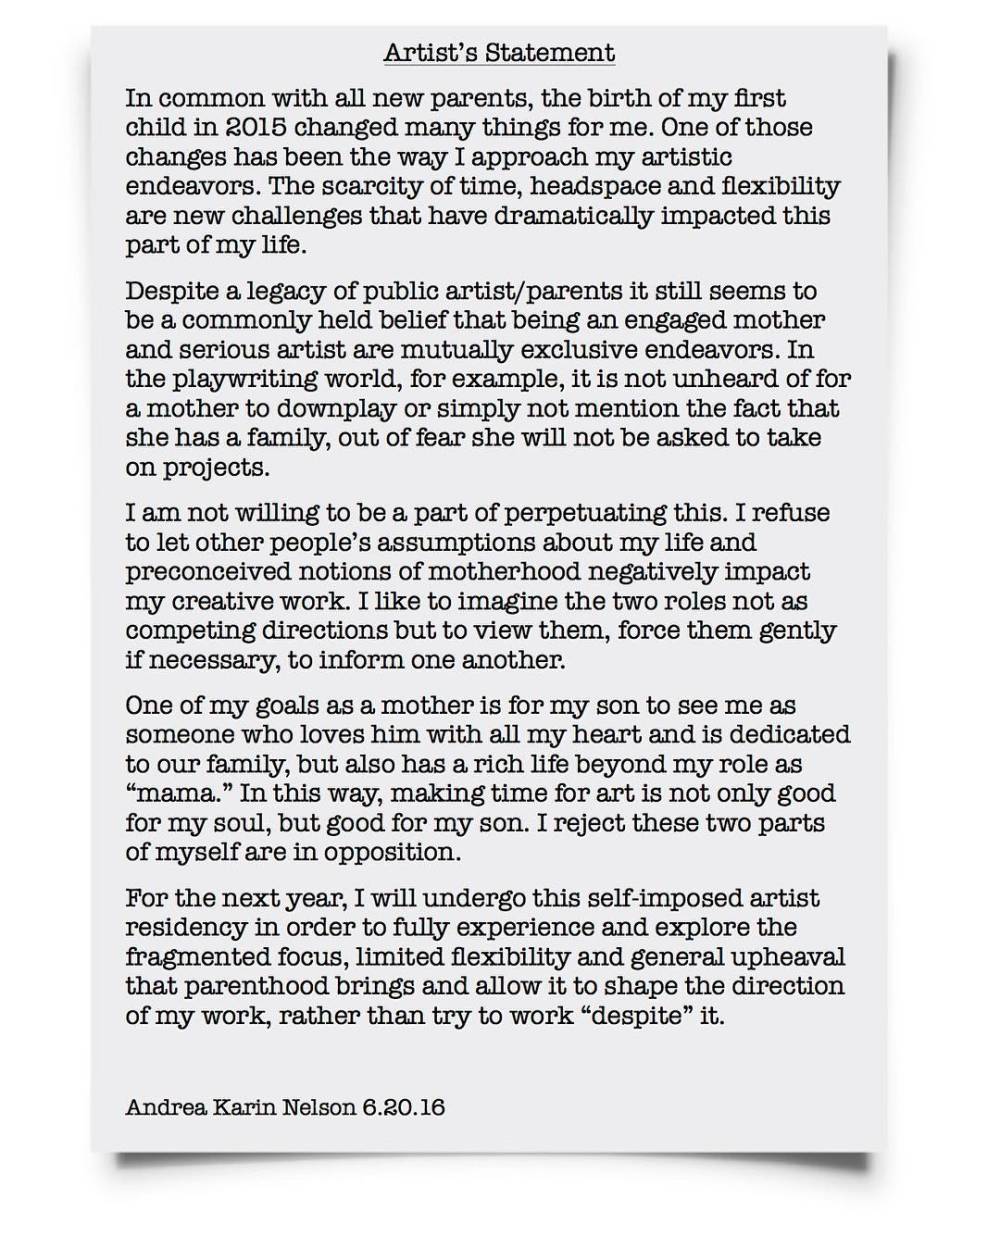 Andrea's Artist Statement for her Artist's Residency in Motherhood. 